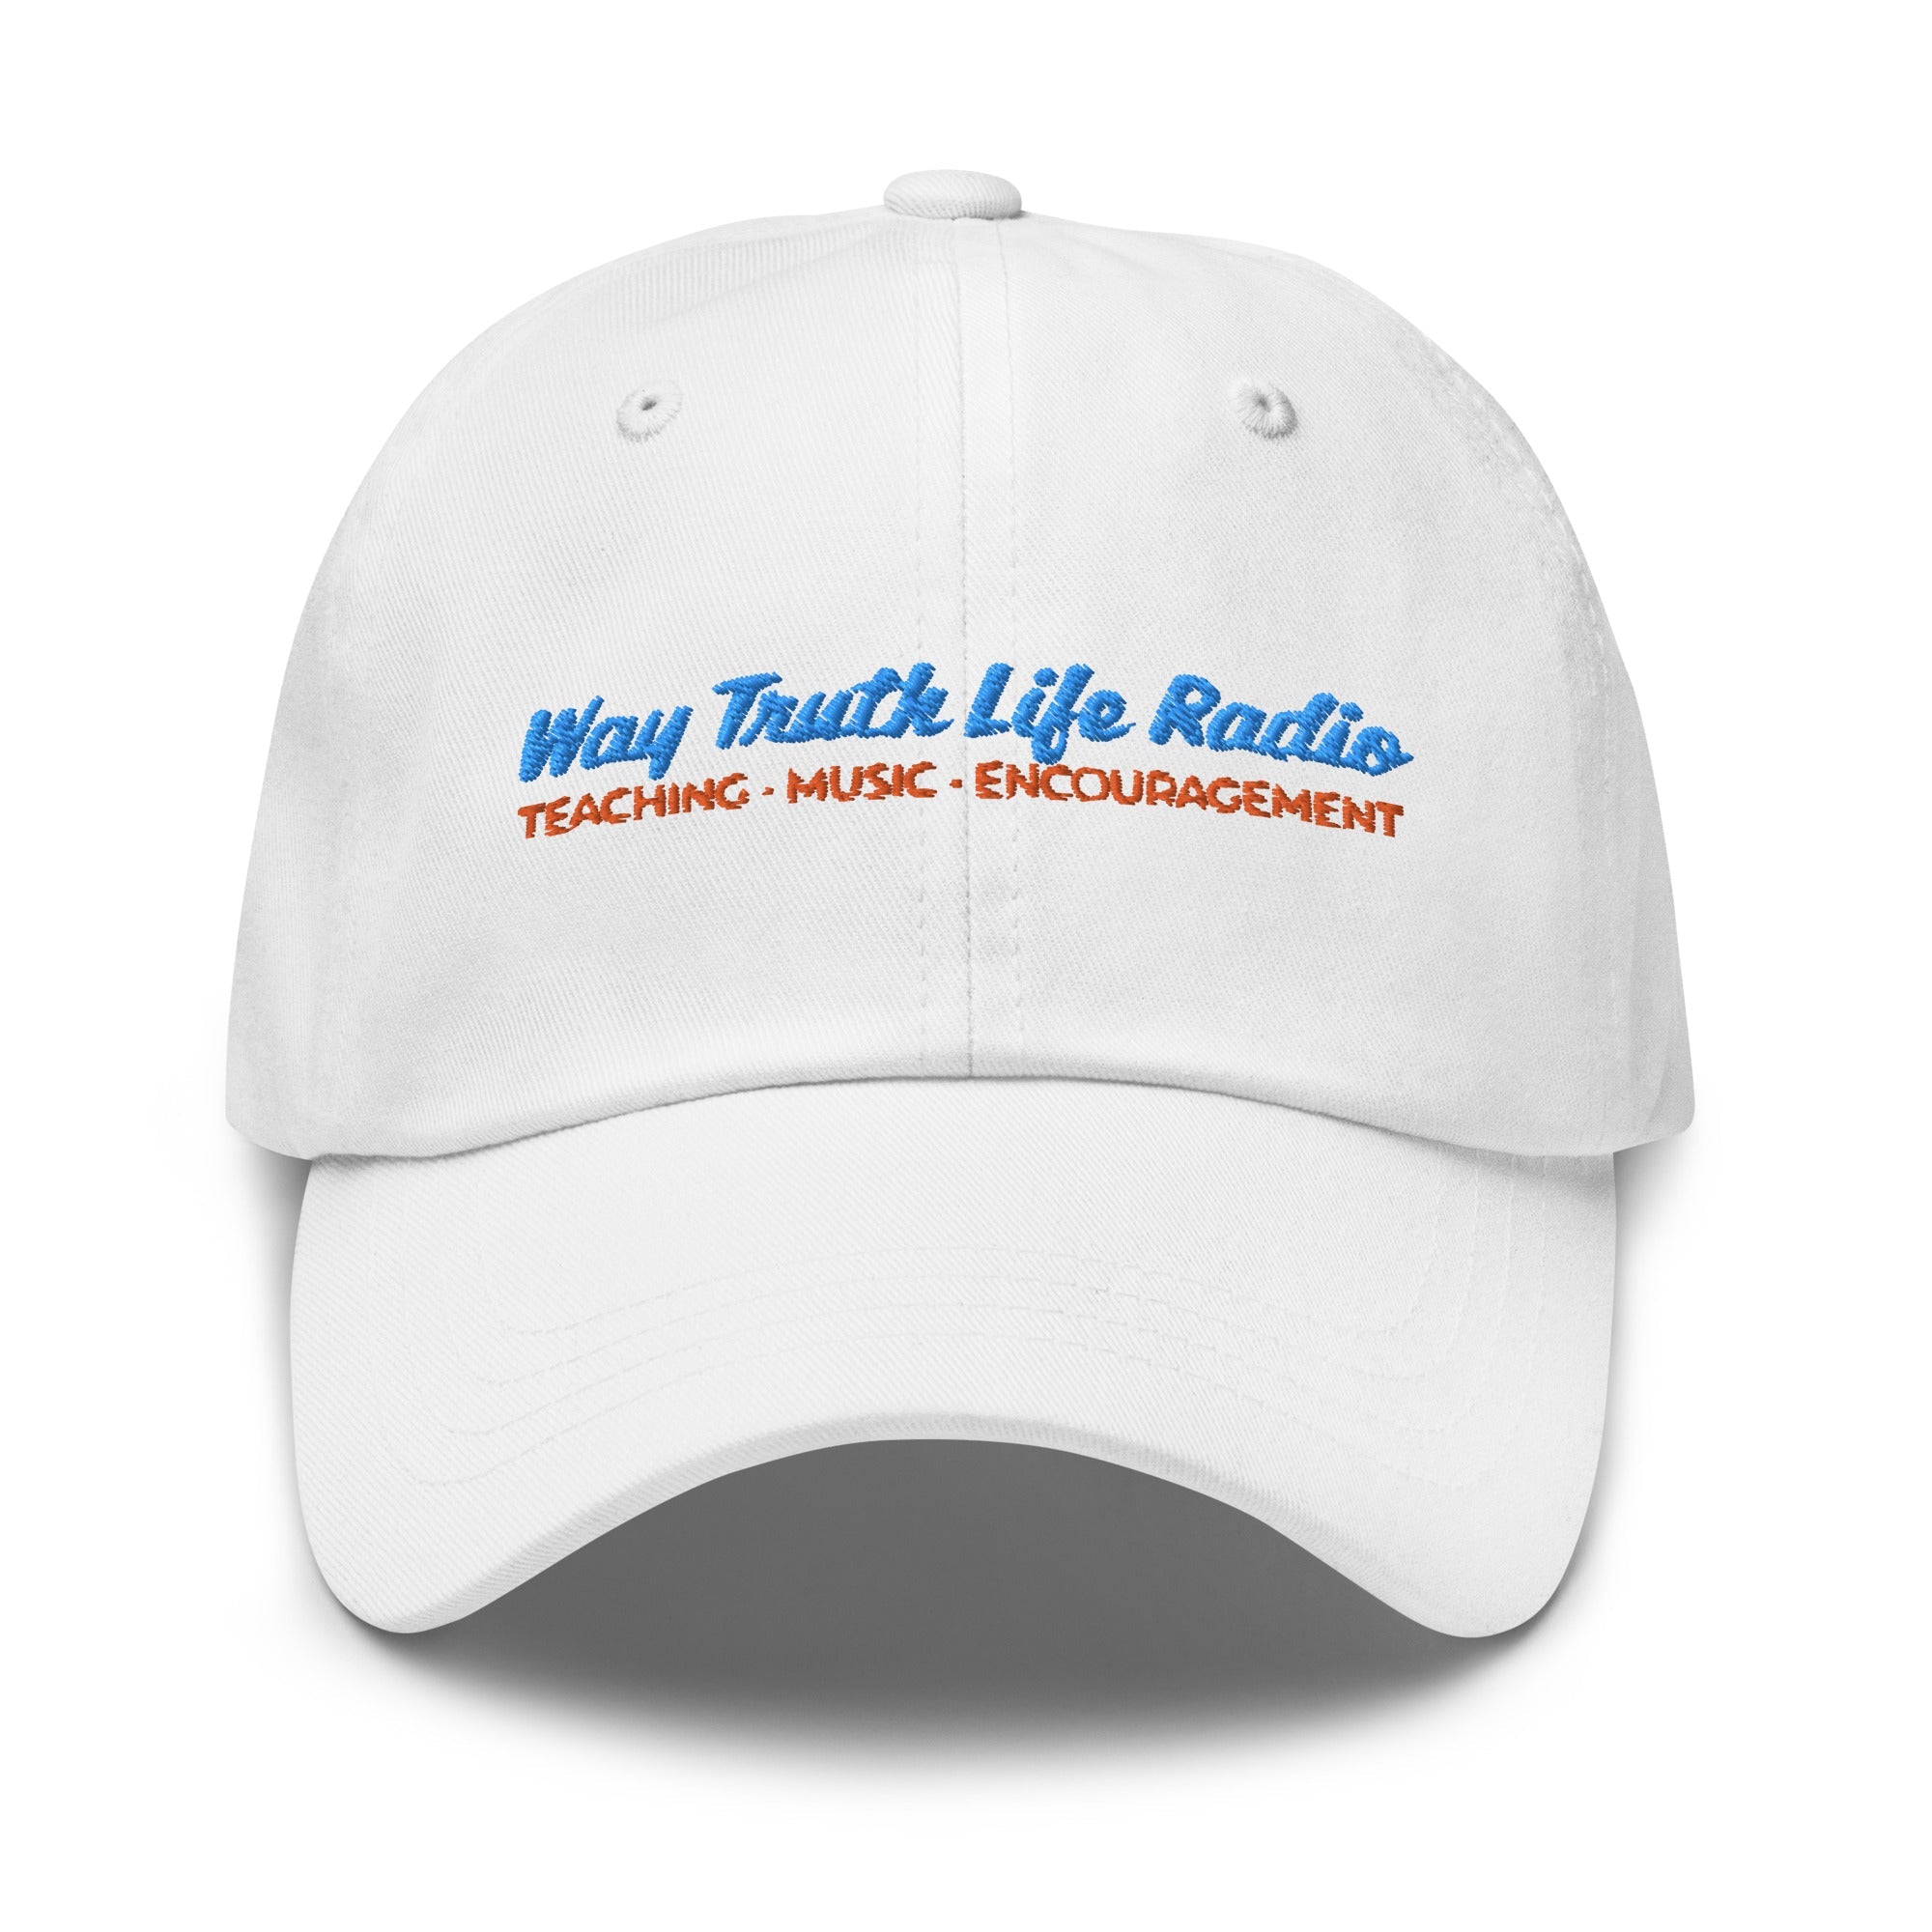 Way Truth Life Radio Dad hat